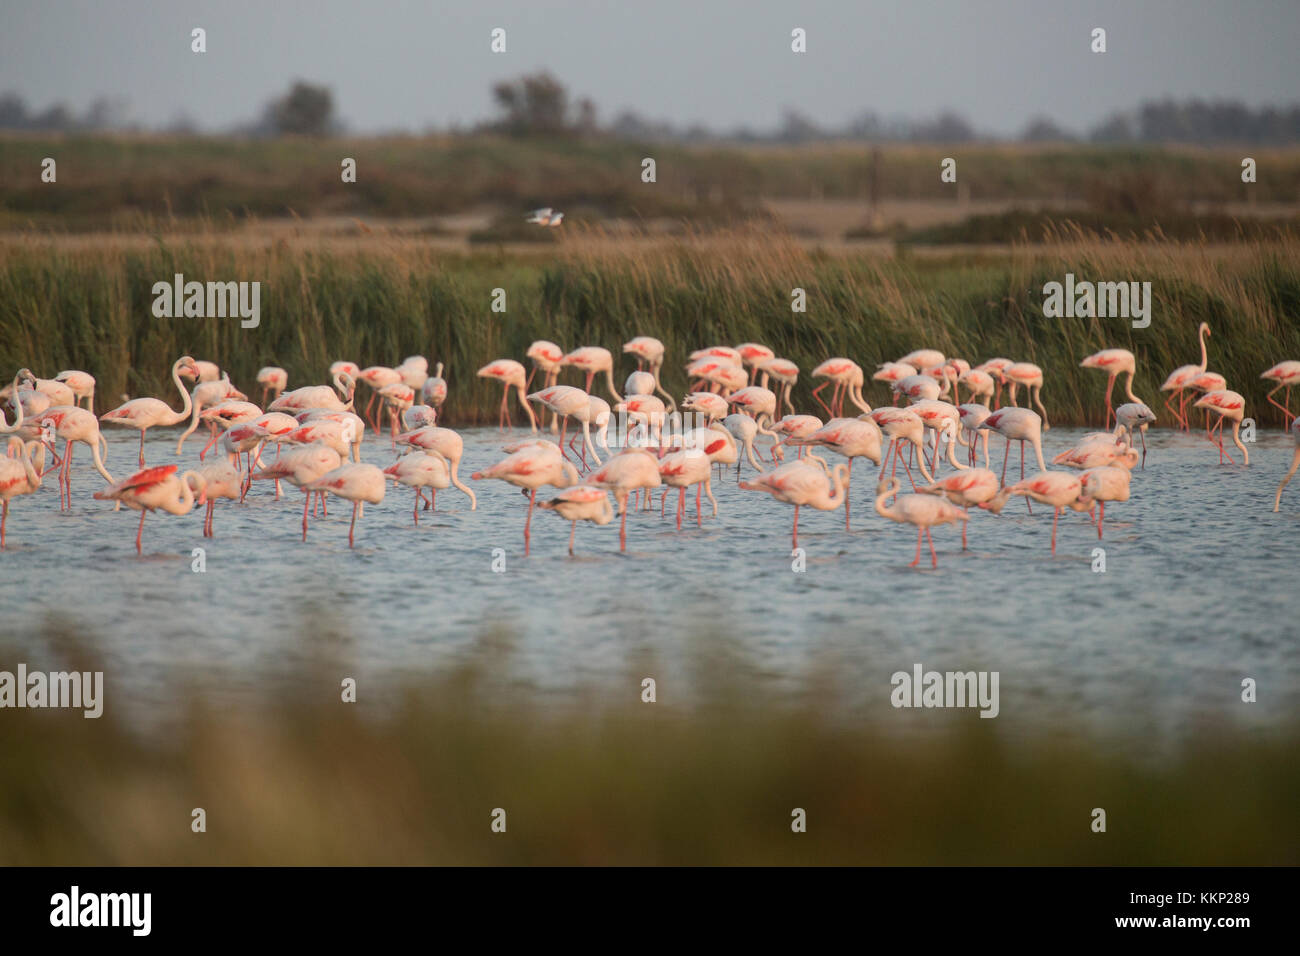 Greater flamingo (Phoenicopterus roseus) flock at Parc naturel régional de Camargue, France Stock Photo